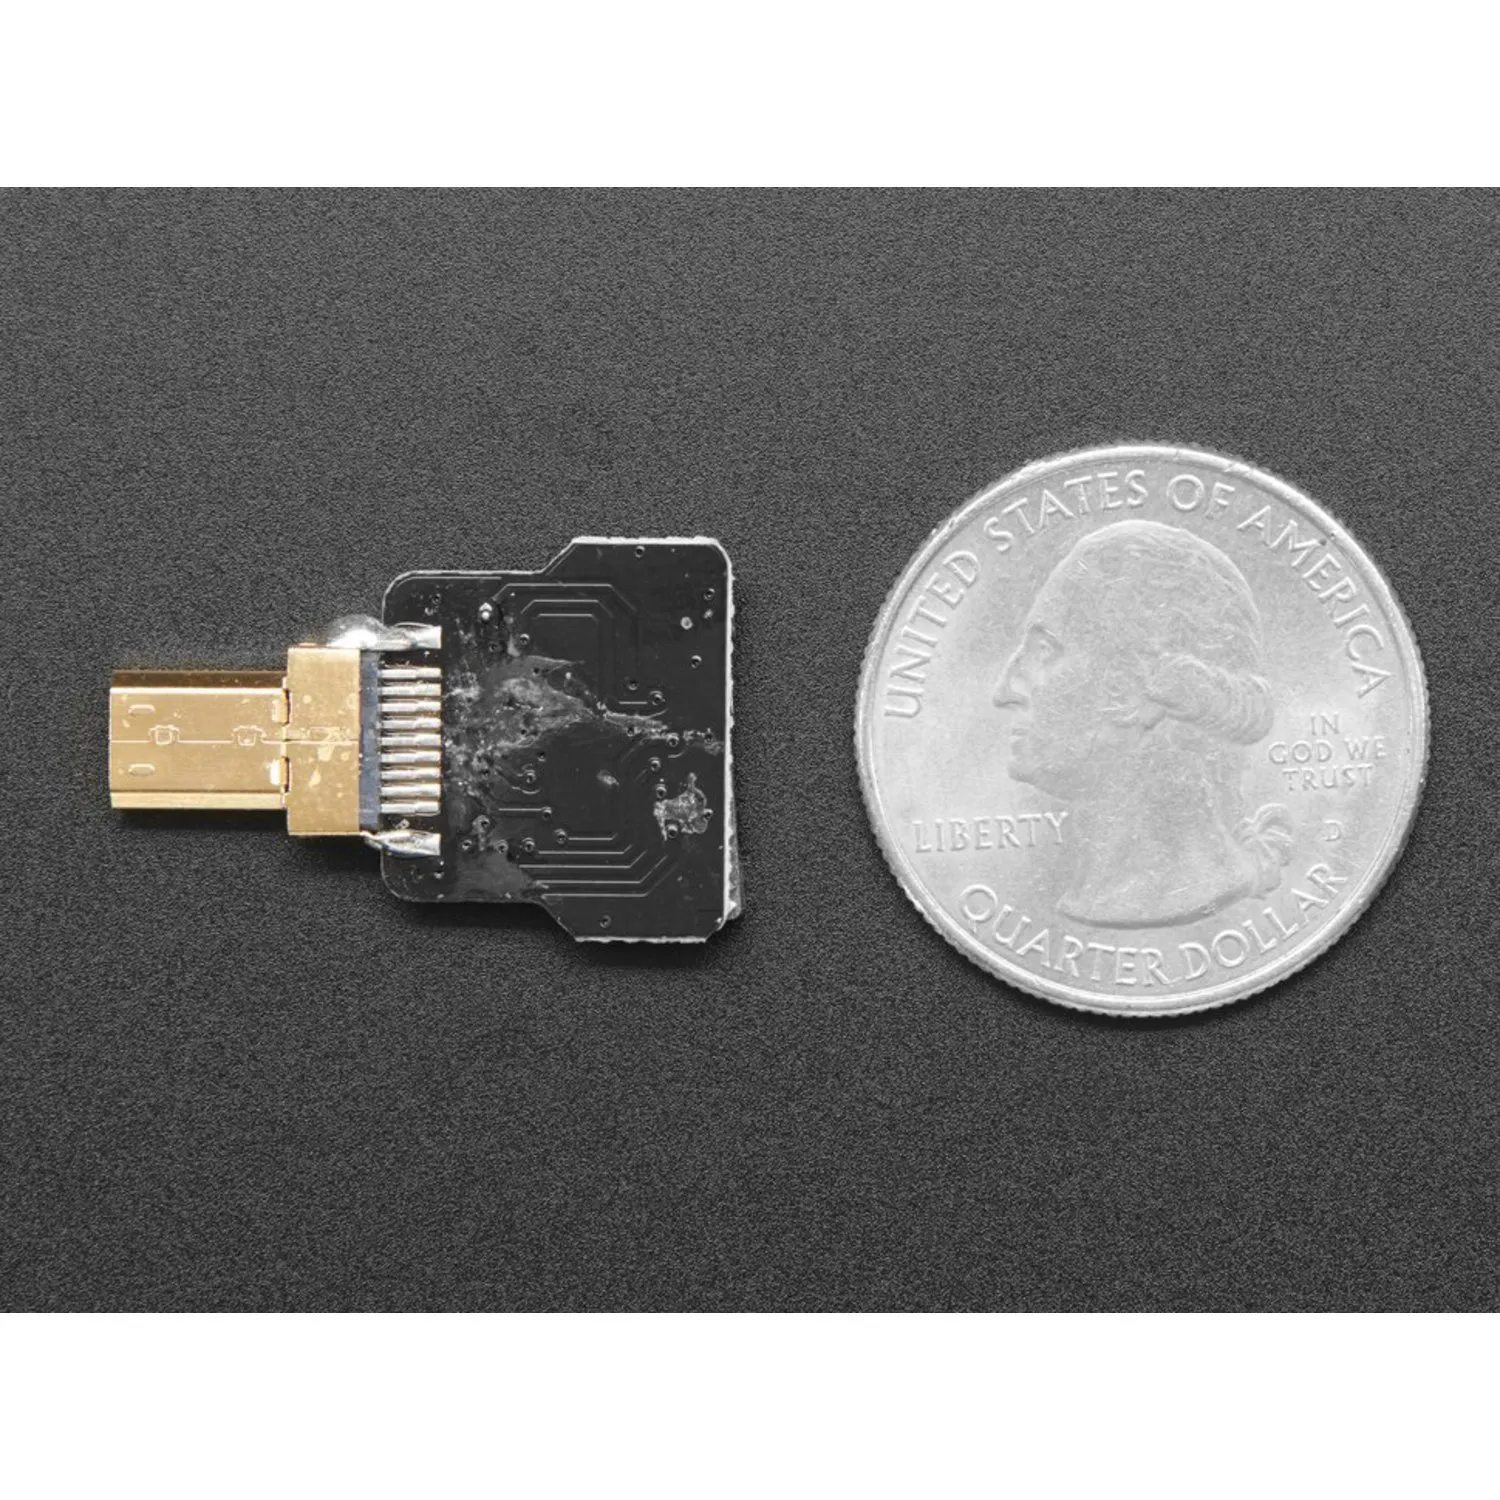 Photo of DIY HDMI Cable Parts - Straight Micro HDMI Plug Adapter